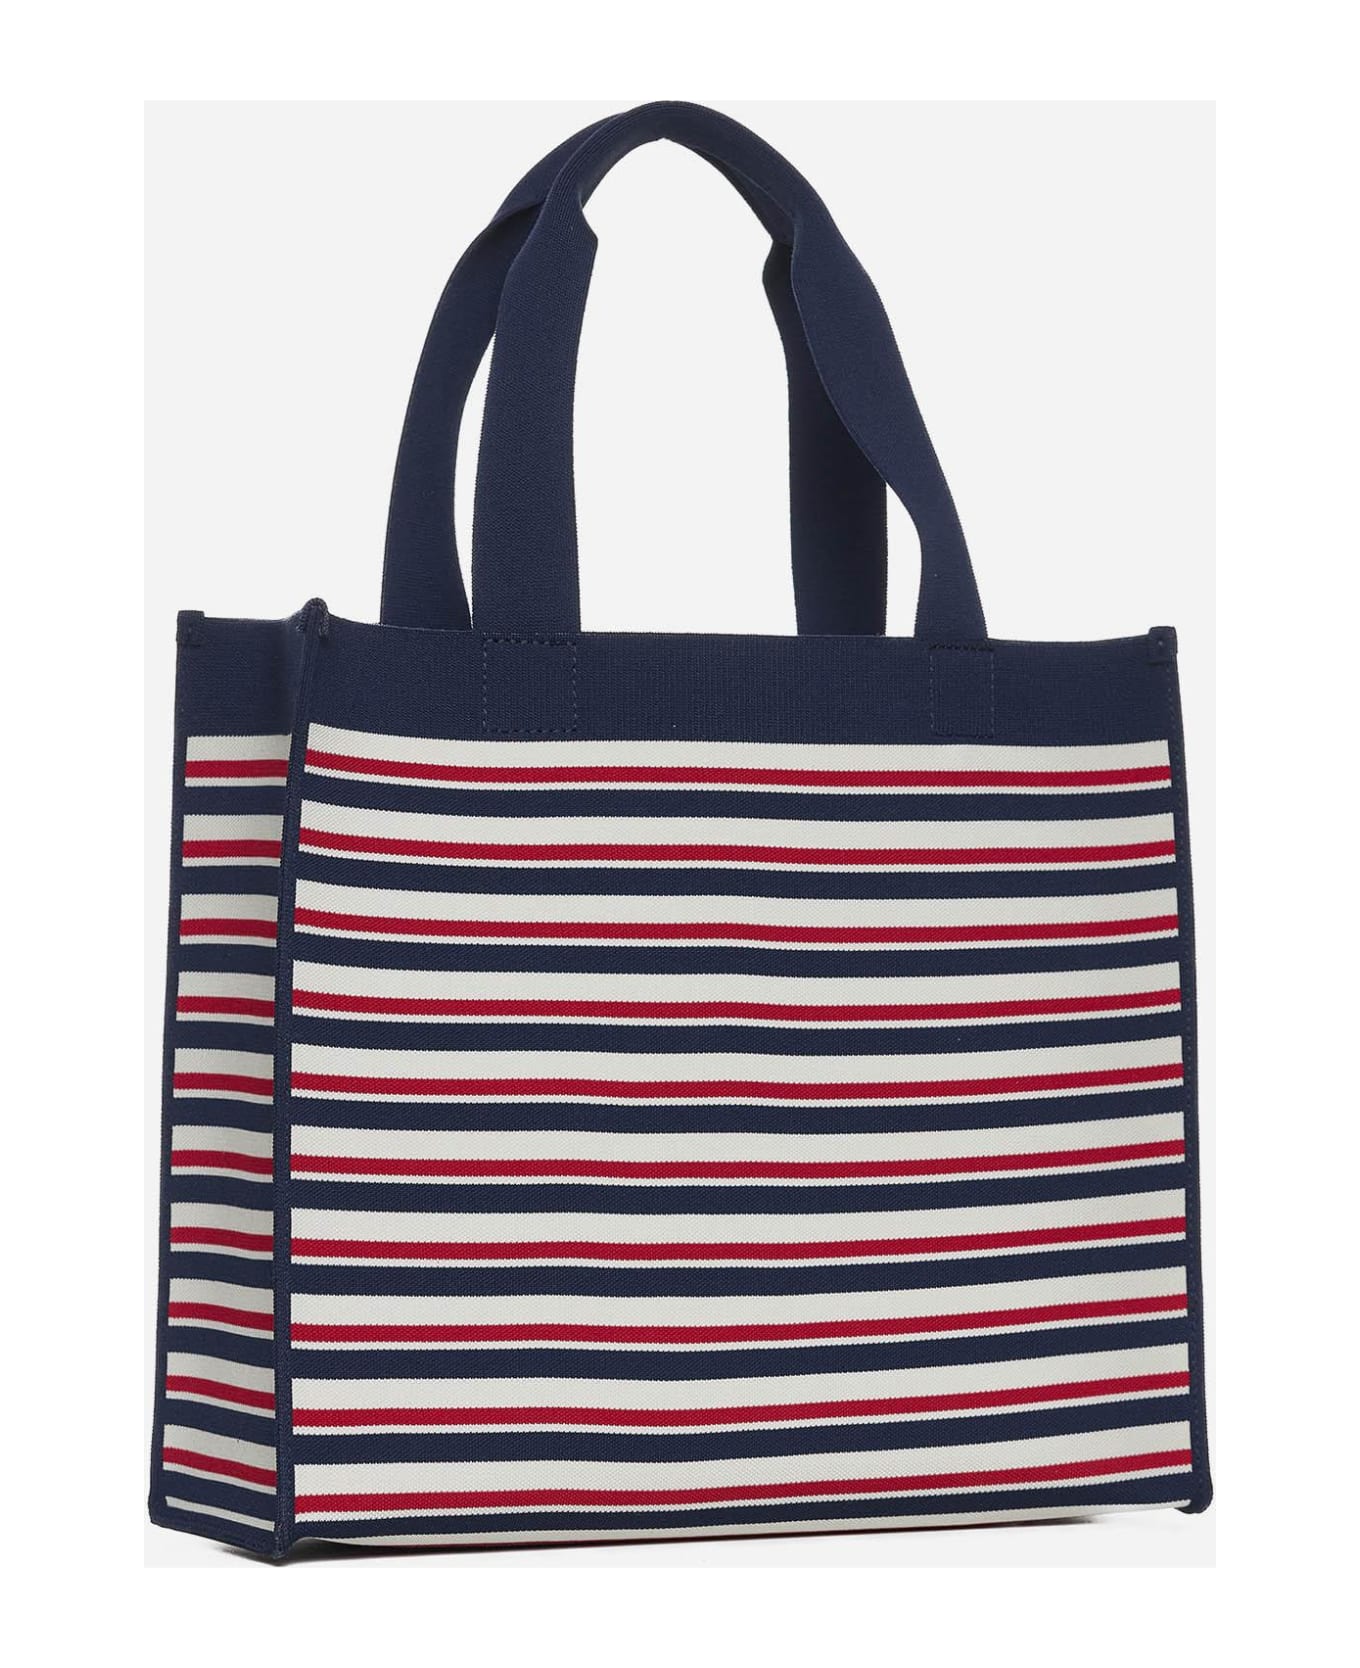 Marni Striped Canvas Medium Shopping Bag - Marine/ivory/red